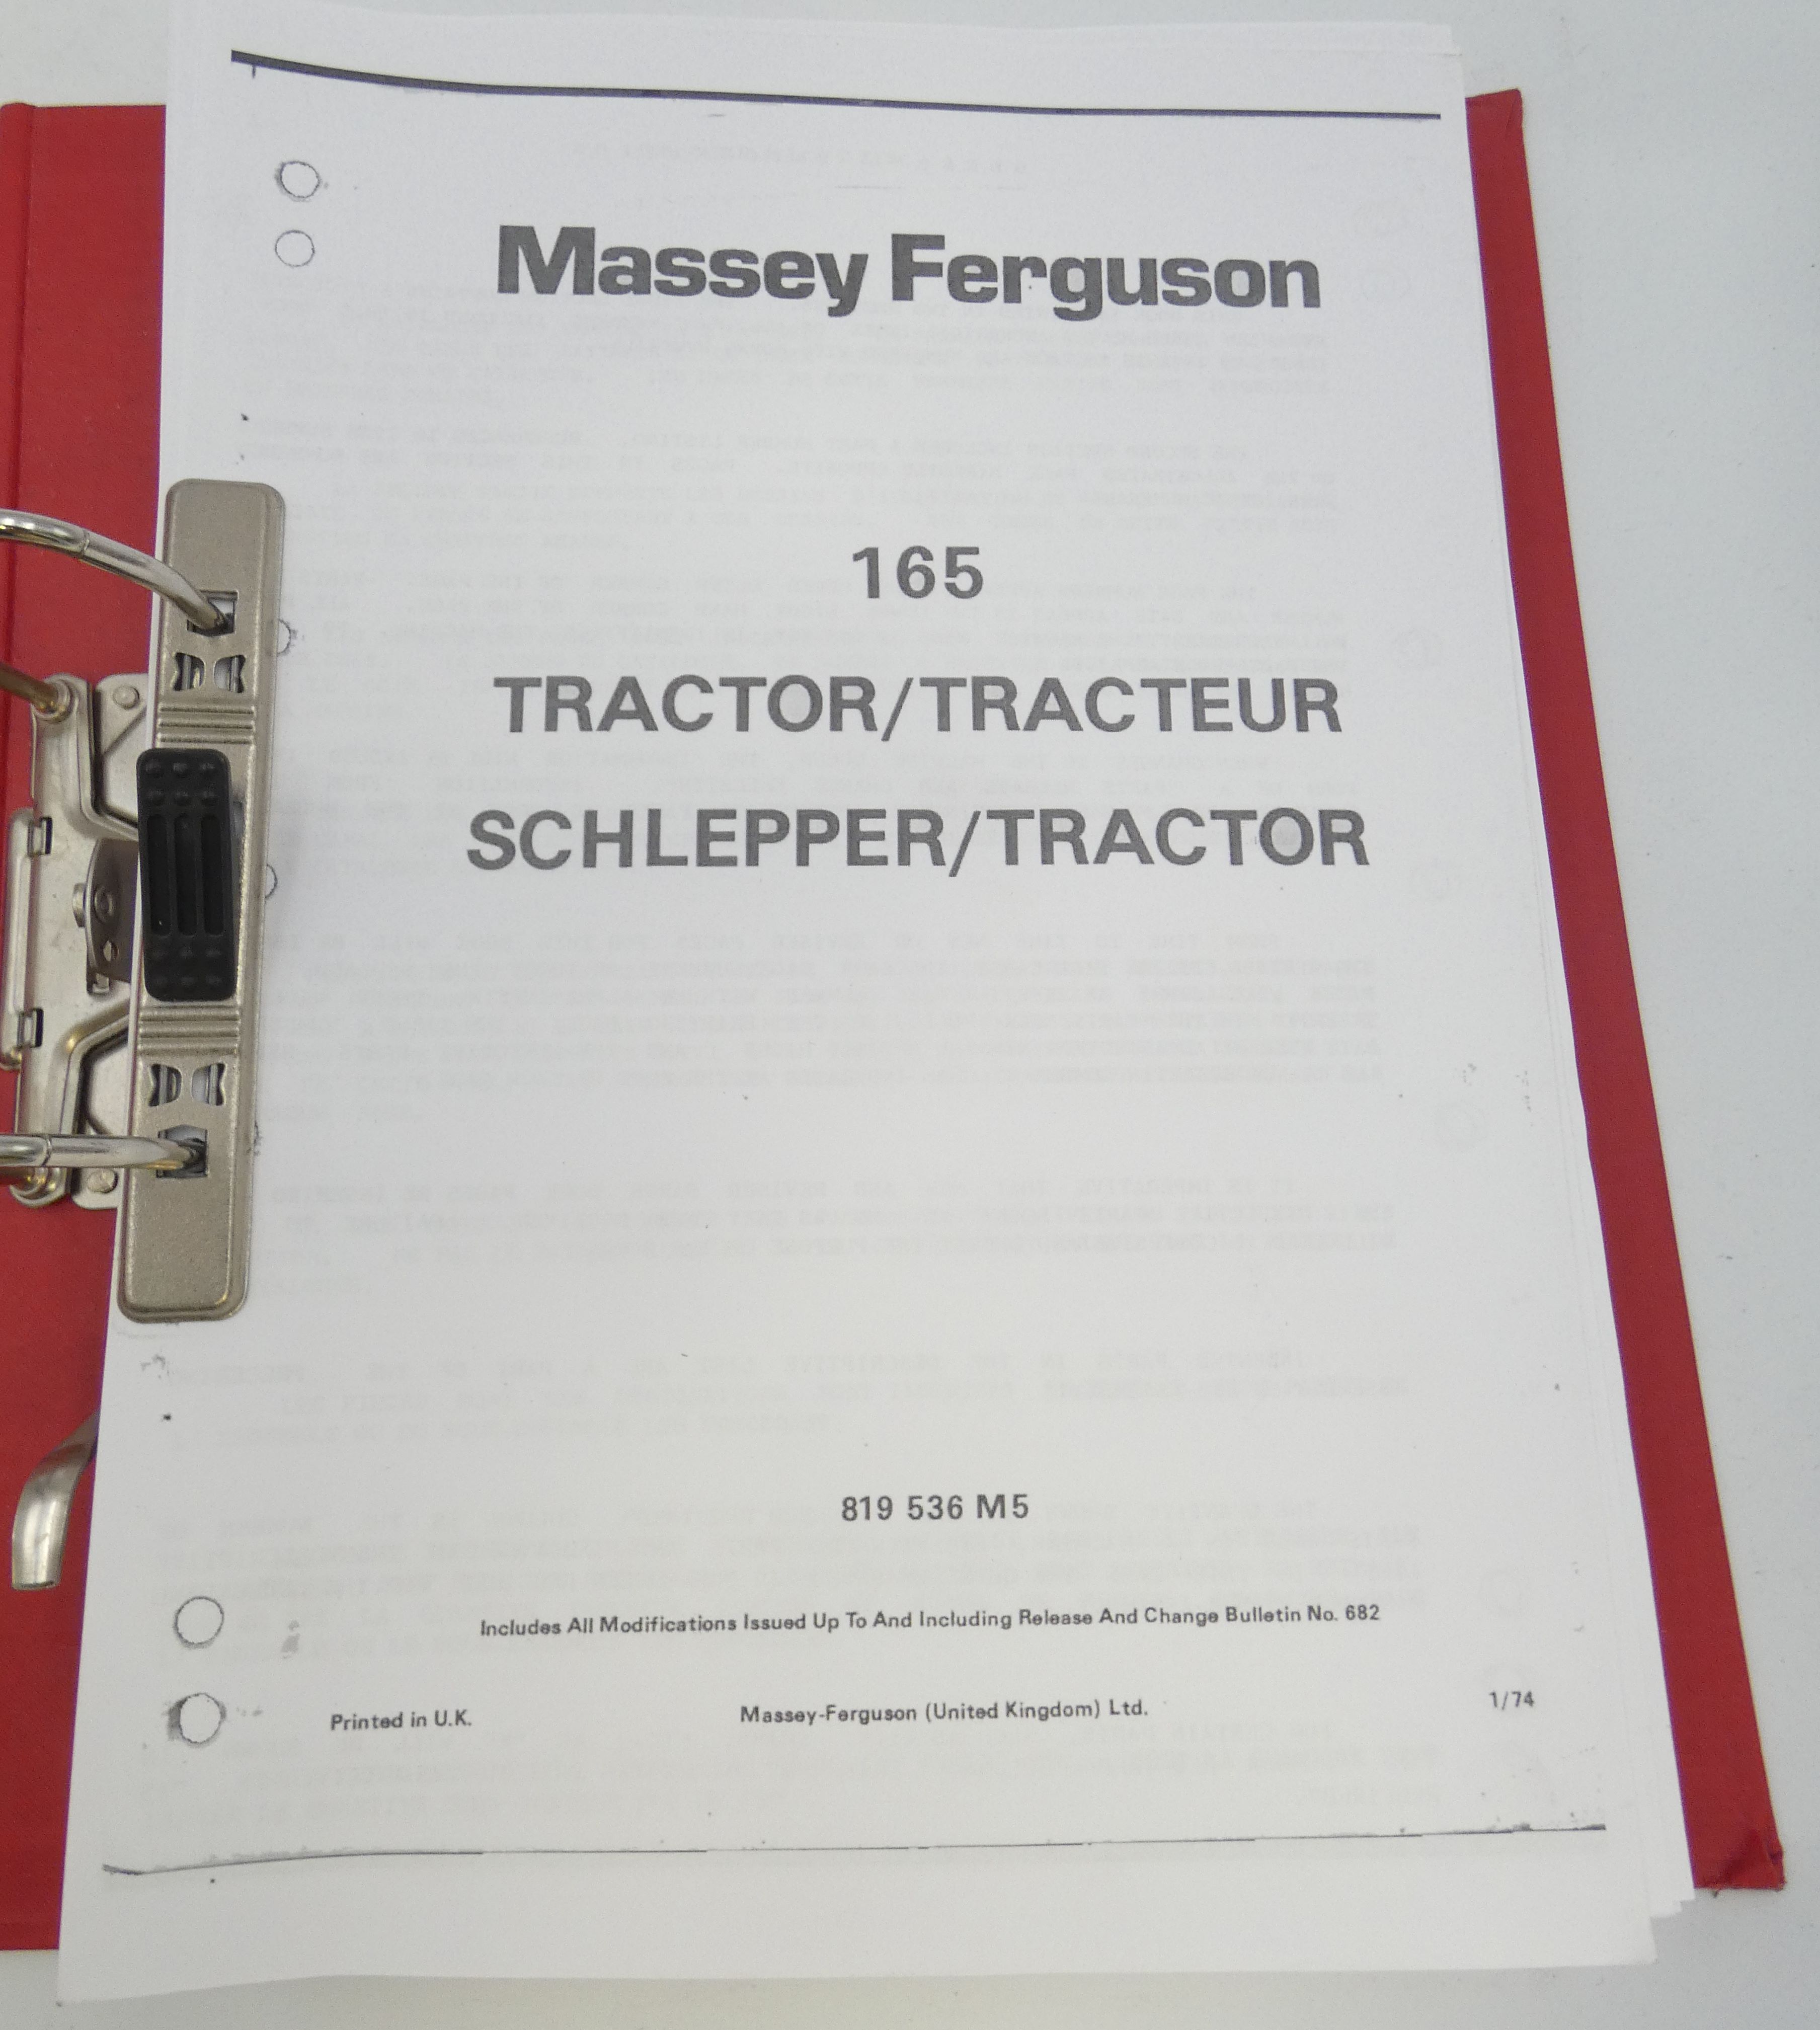 Massey-Ferguson 165 tractor parts book